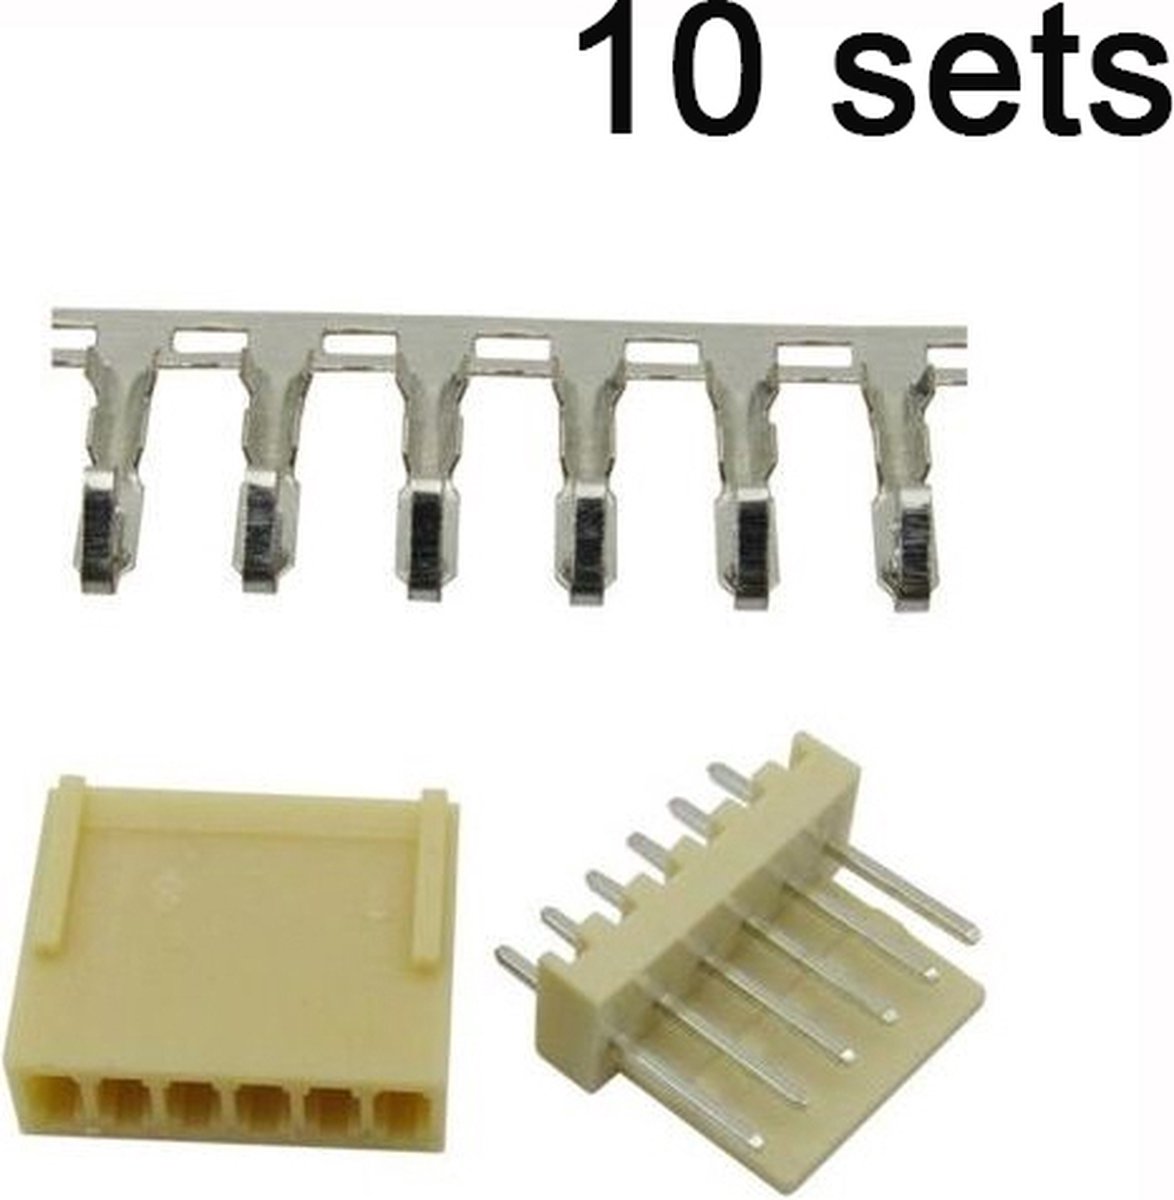 KF2510-6P 6pin Connector set recht 10 sets